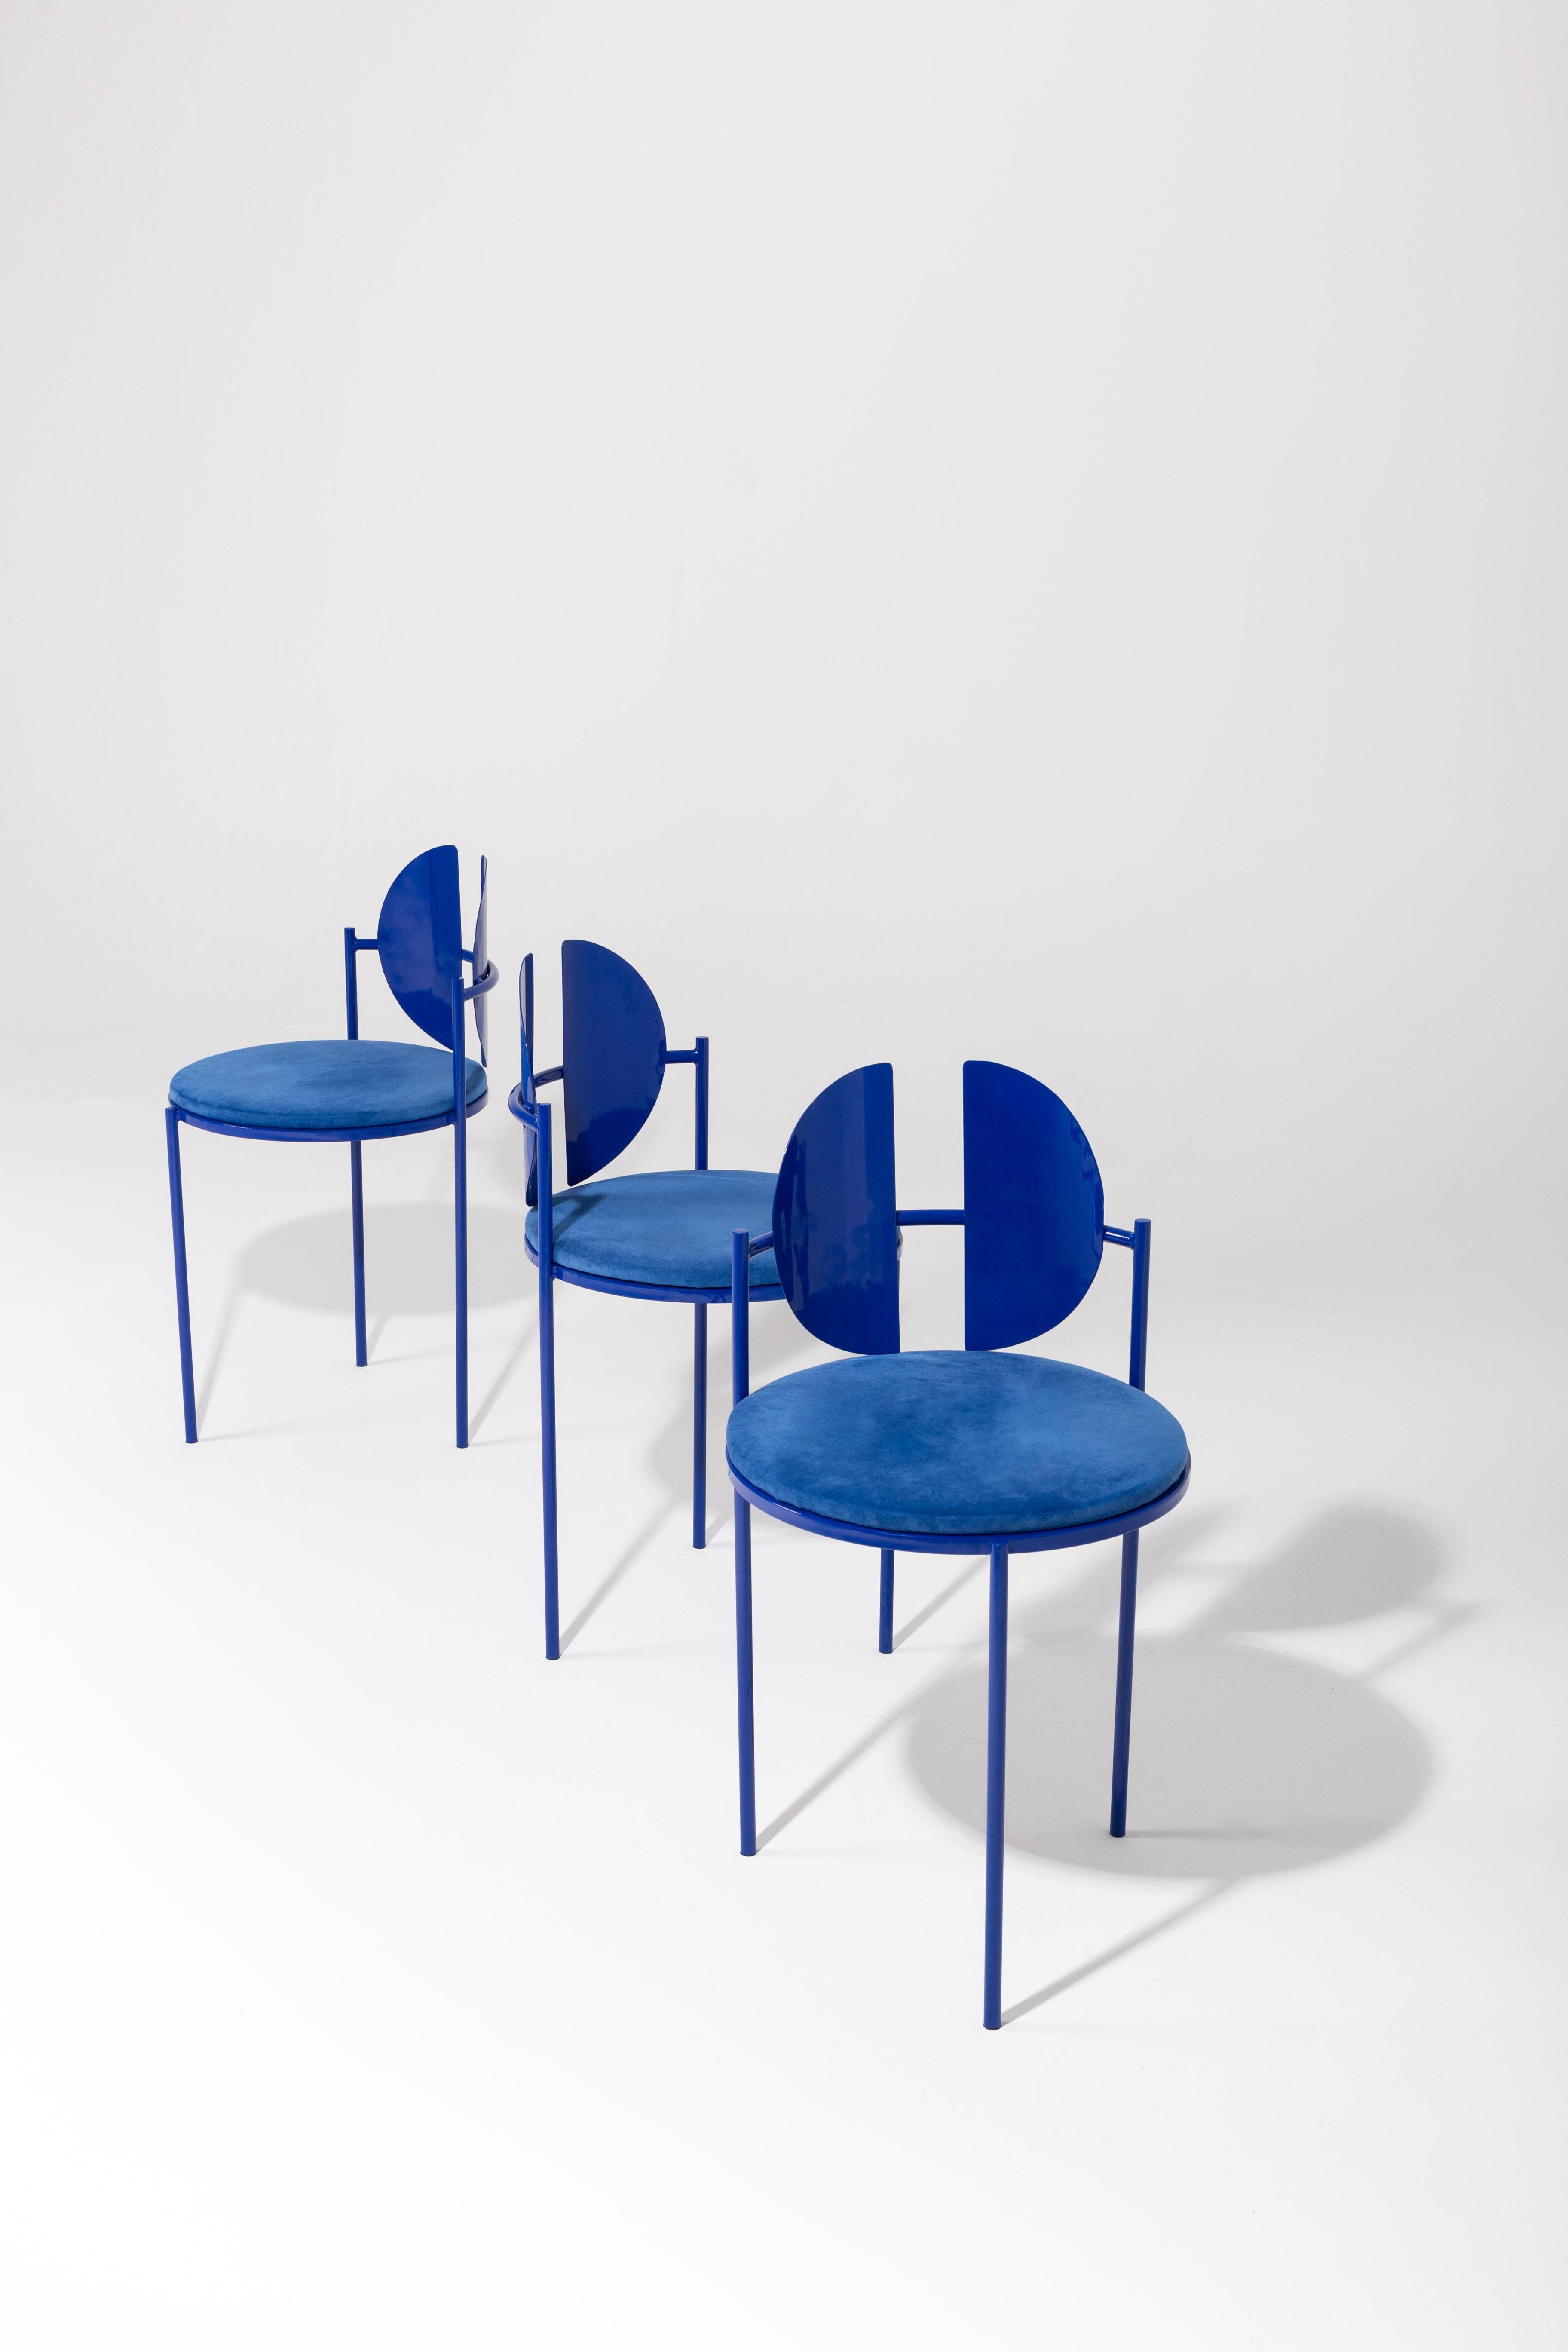 Spanish Qoticher Chair by Ángel Mombiedro